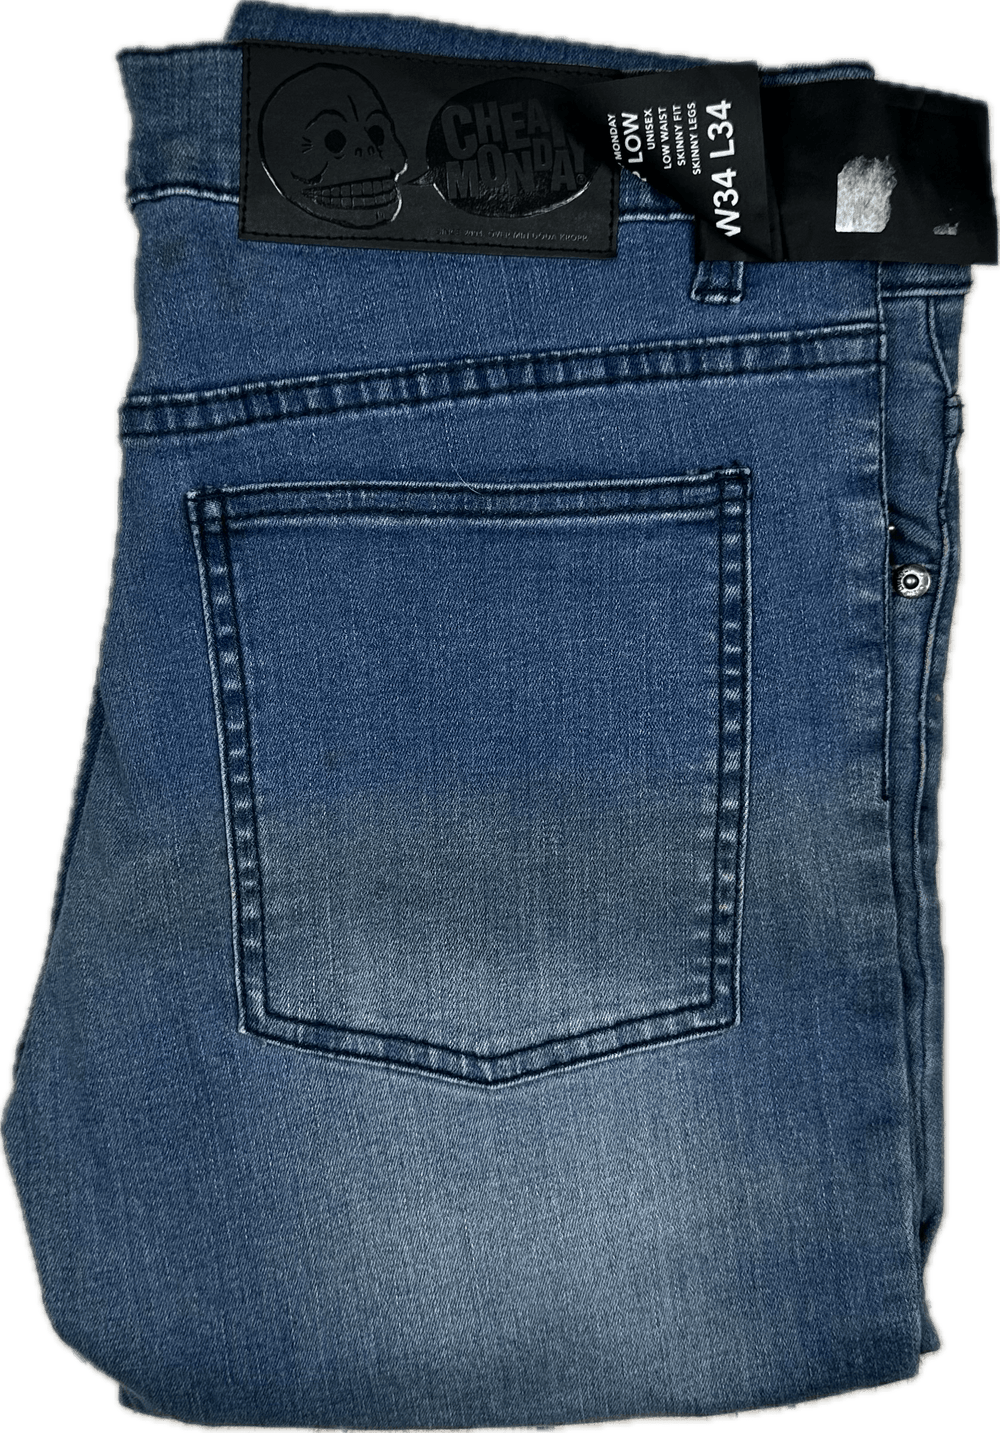 NWT - Cheap Monday 'Zip Low Mahmud Medium' Skinny Jeans - Size 34//34 - Jean Pool